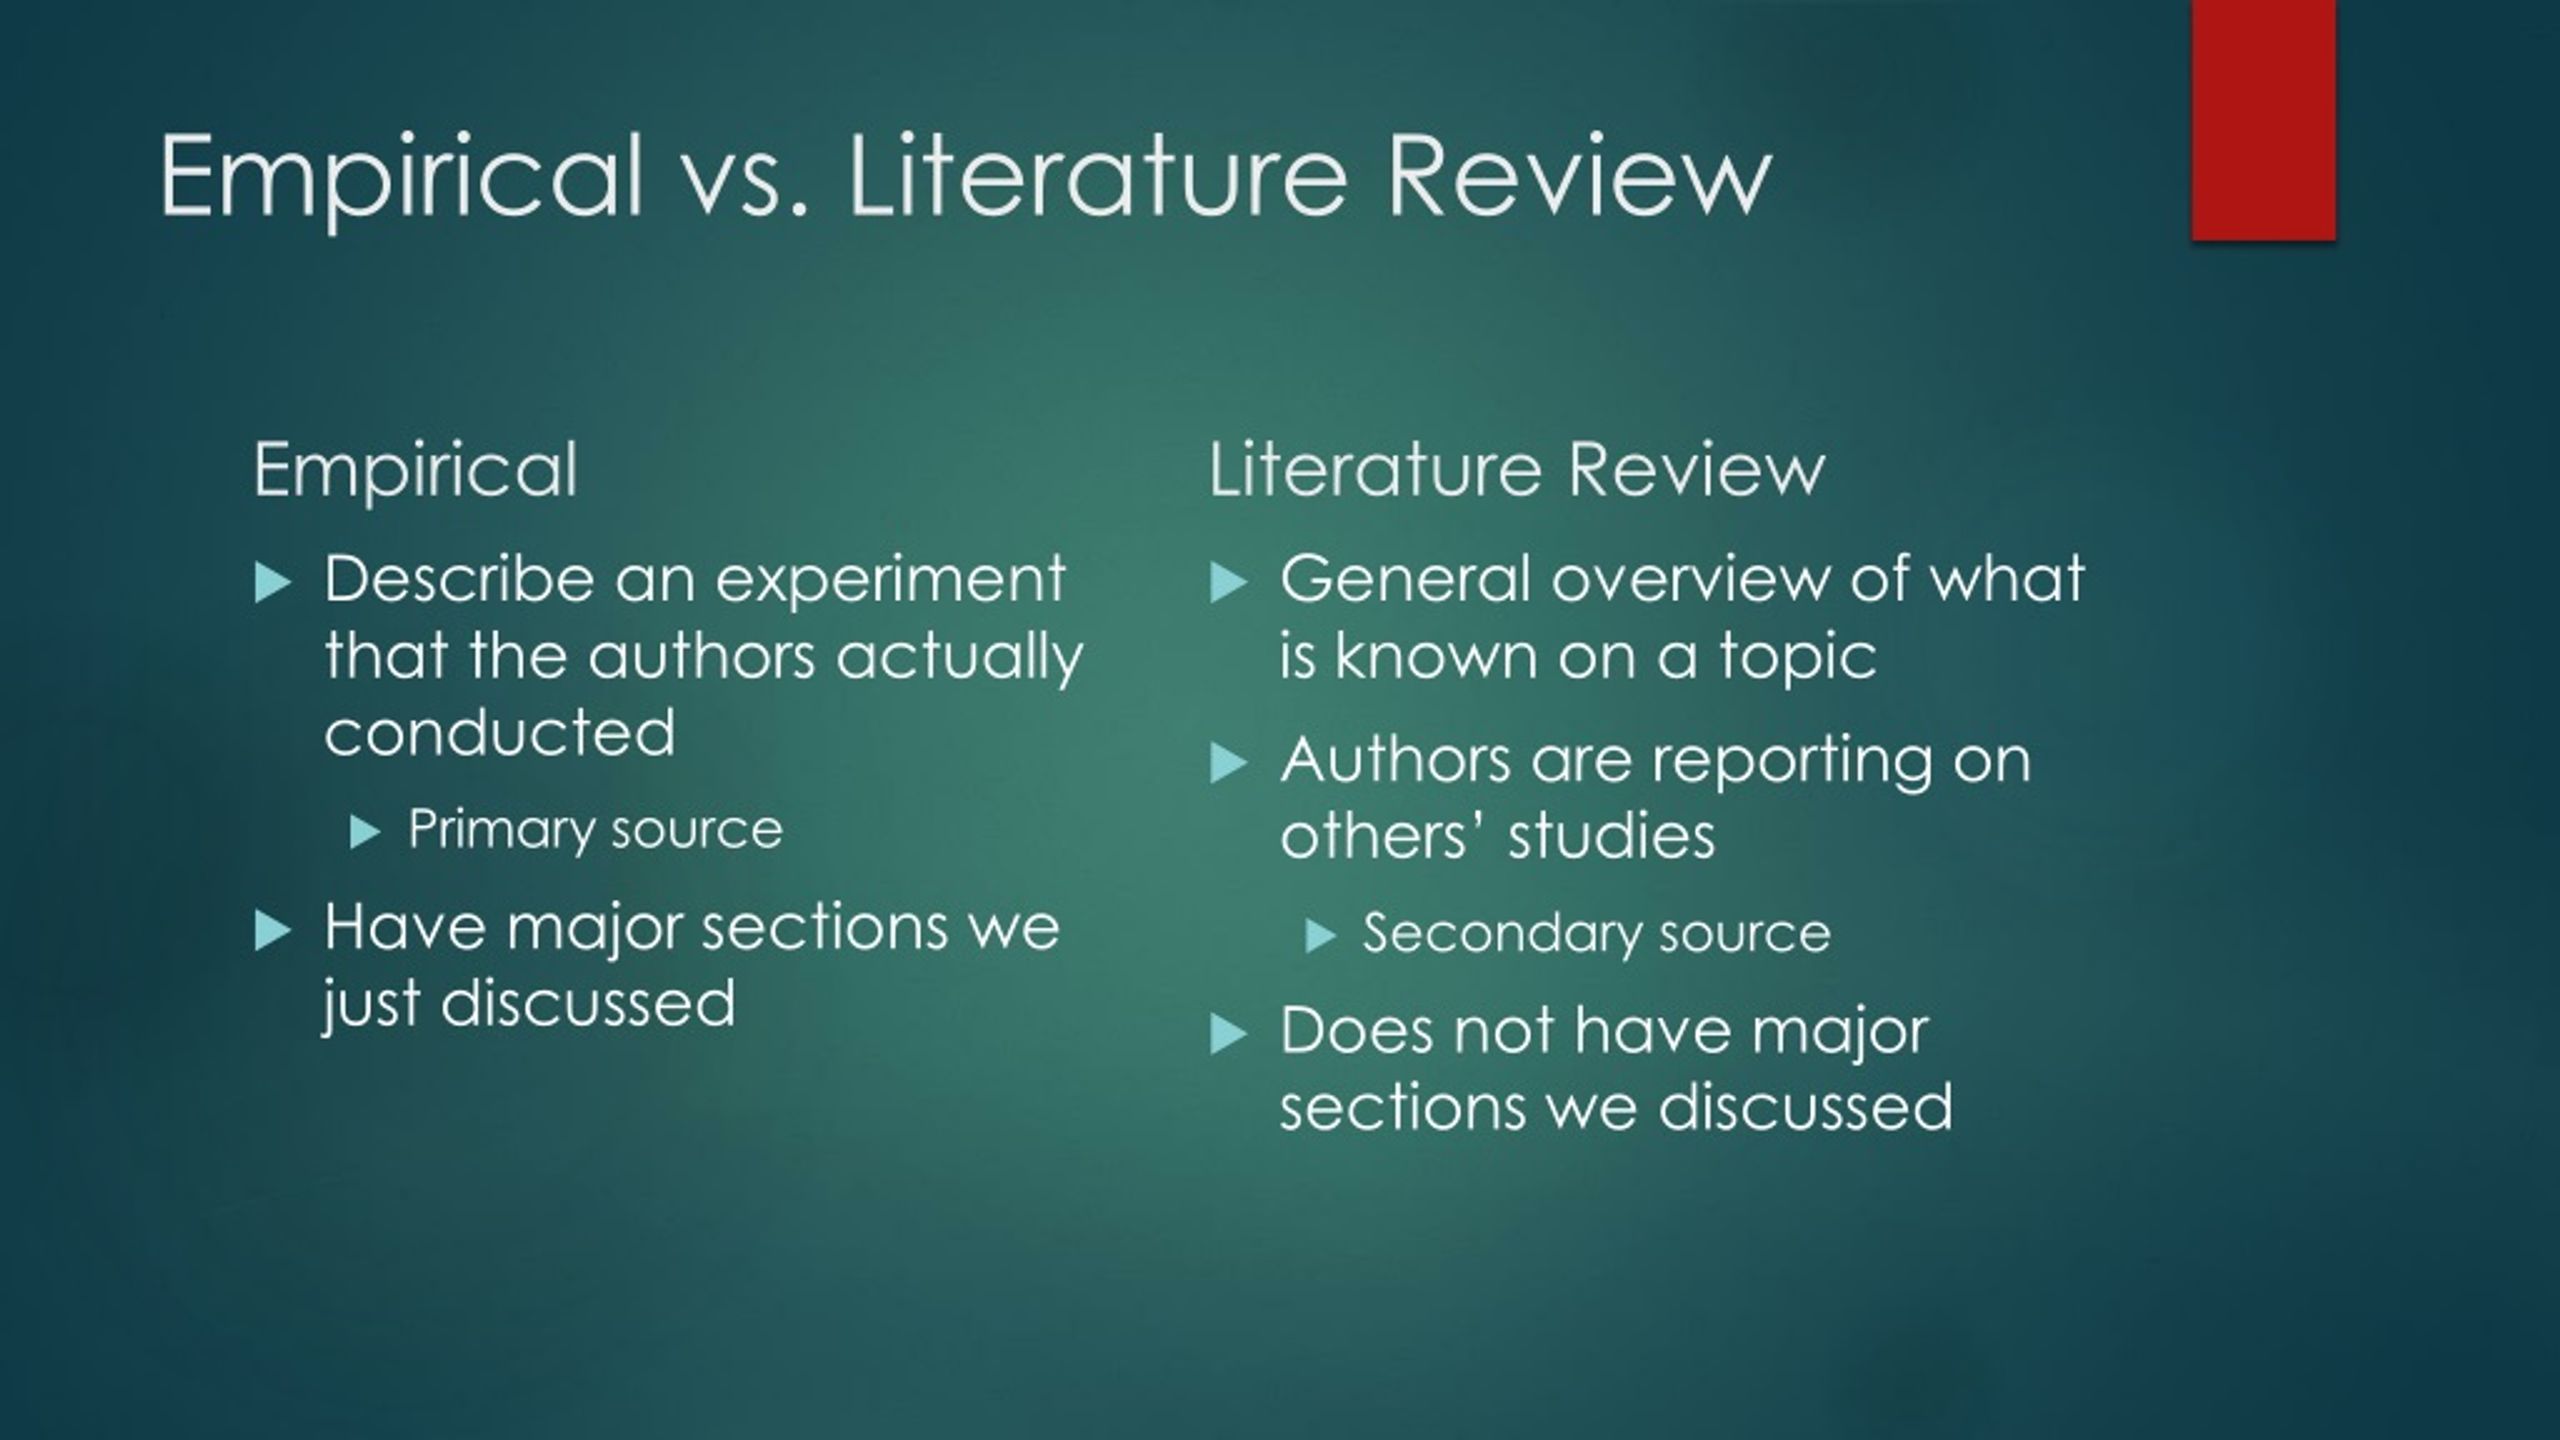 is a literature review an empirical study